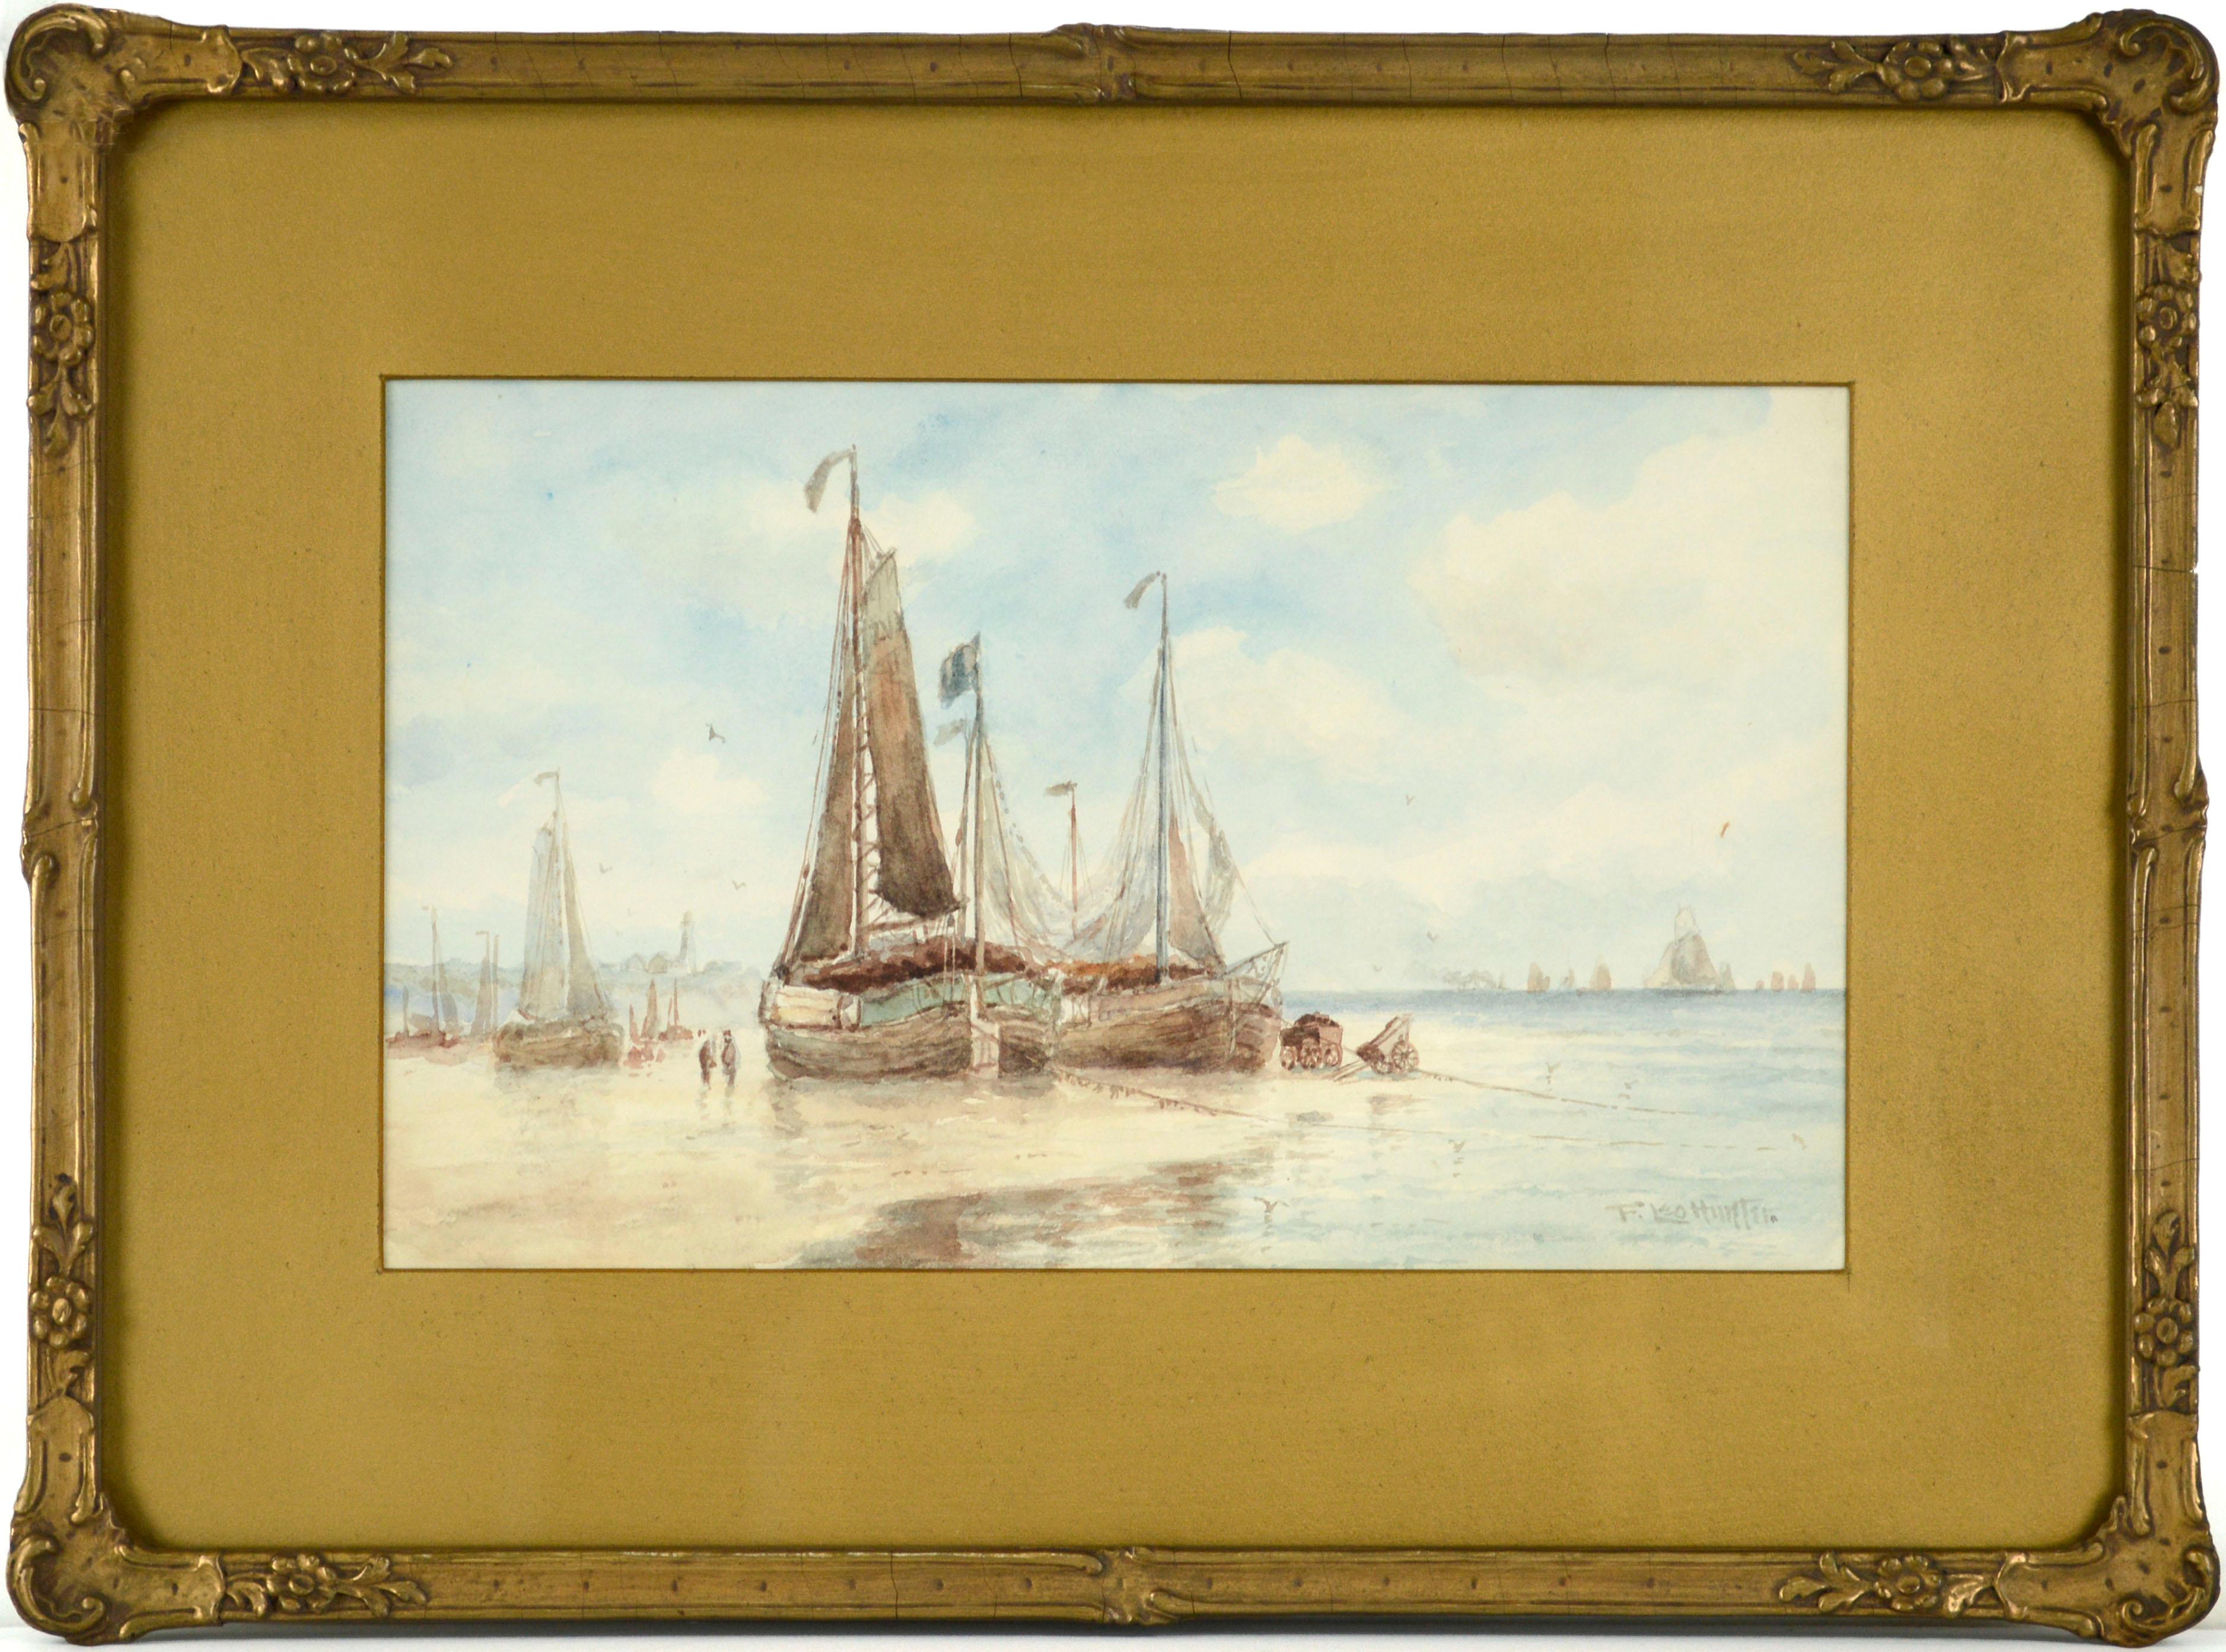 Frederick Leo Hunter Landscape Art - Sailboats in the Harbor, Early 20th Century Figurative Landscape Watercolor